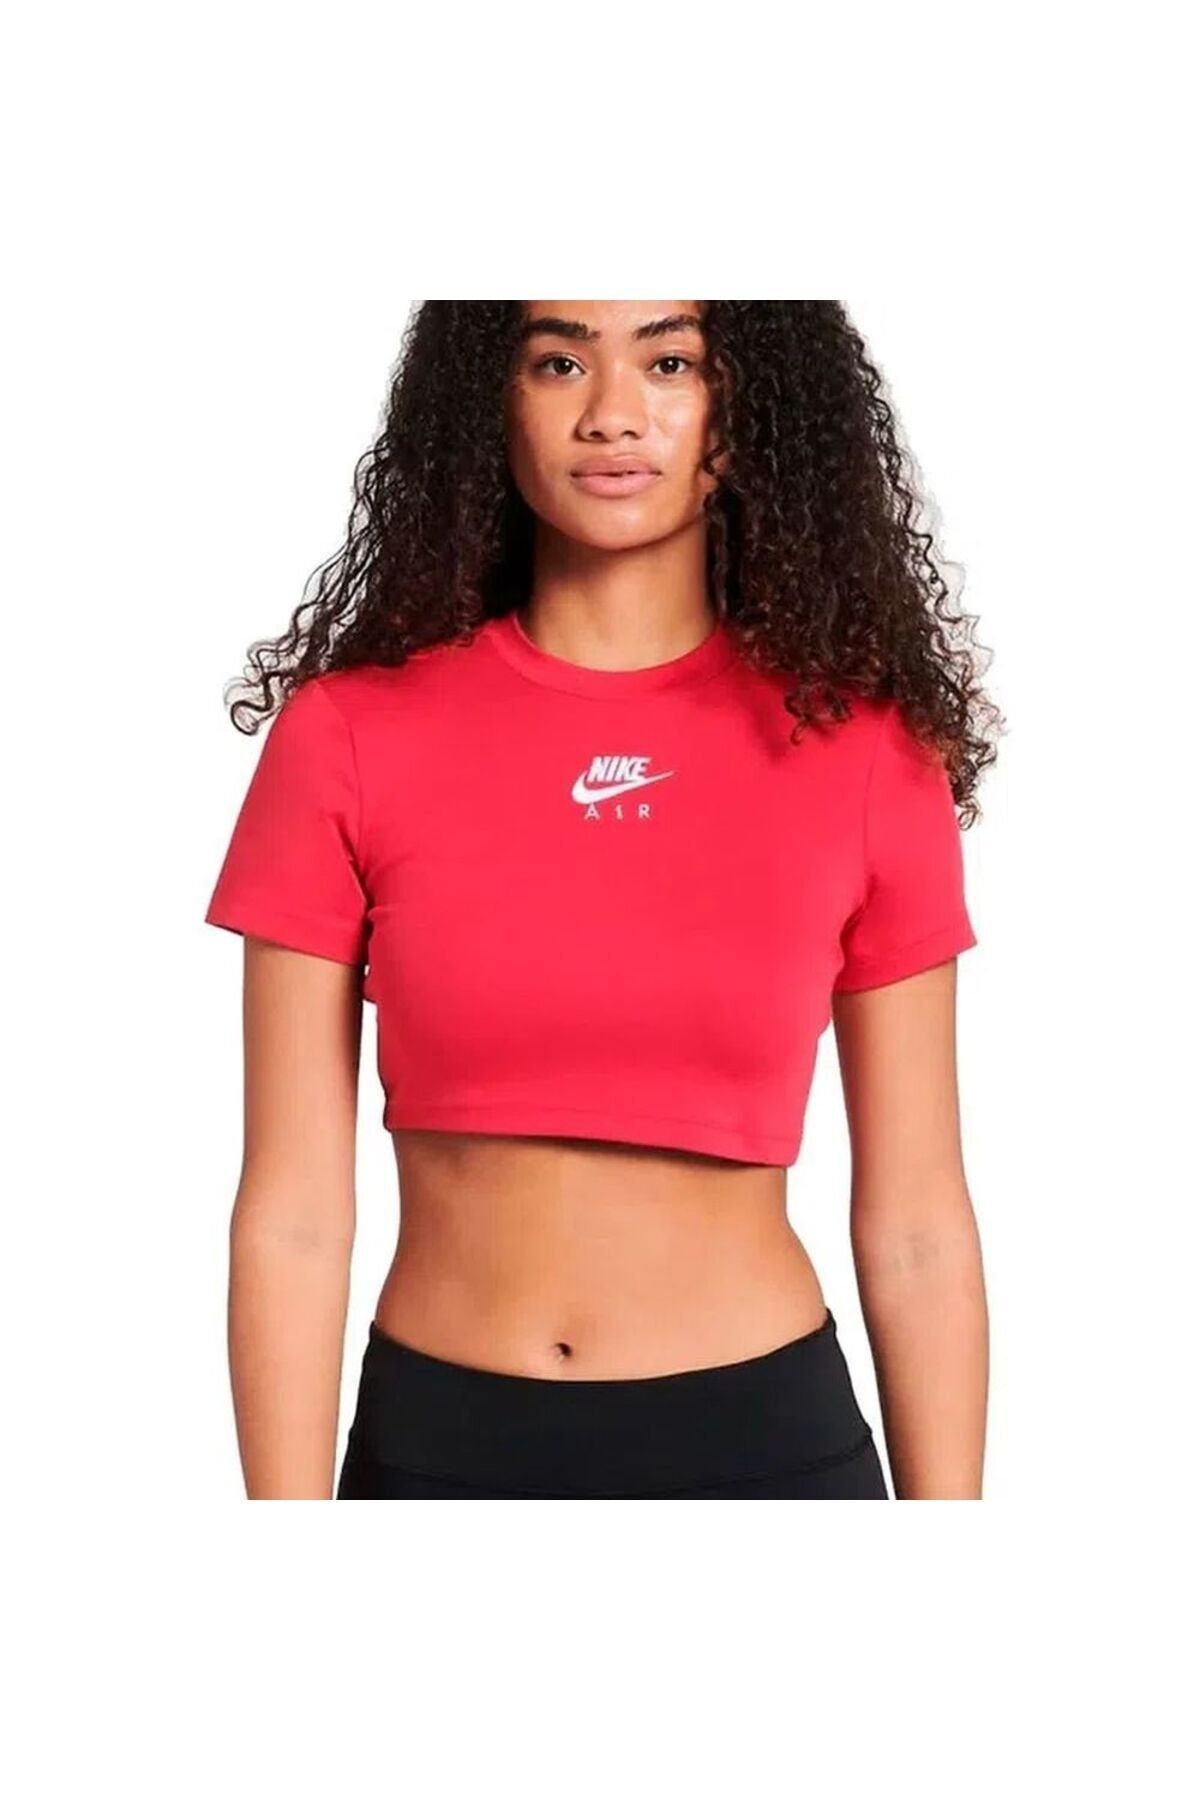 Nike Air Crop Top Women's T-shirt DR6155-617